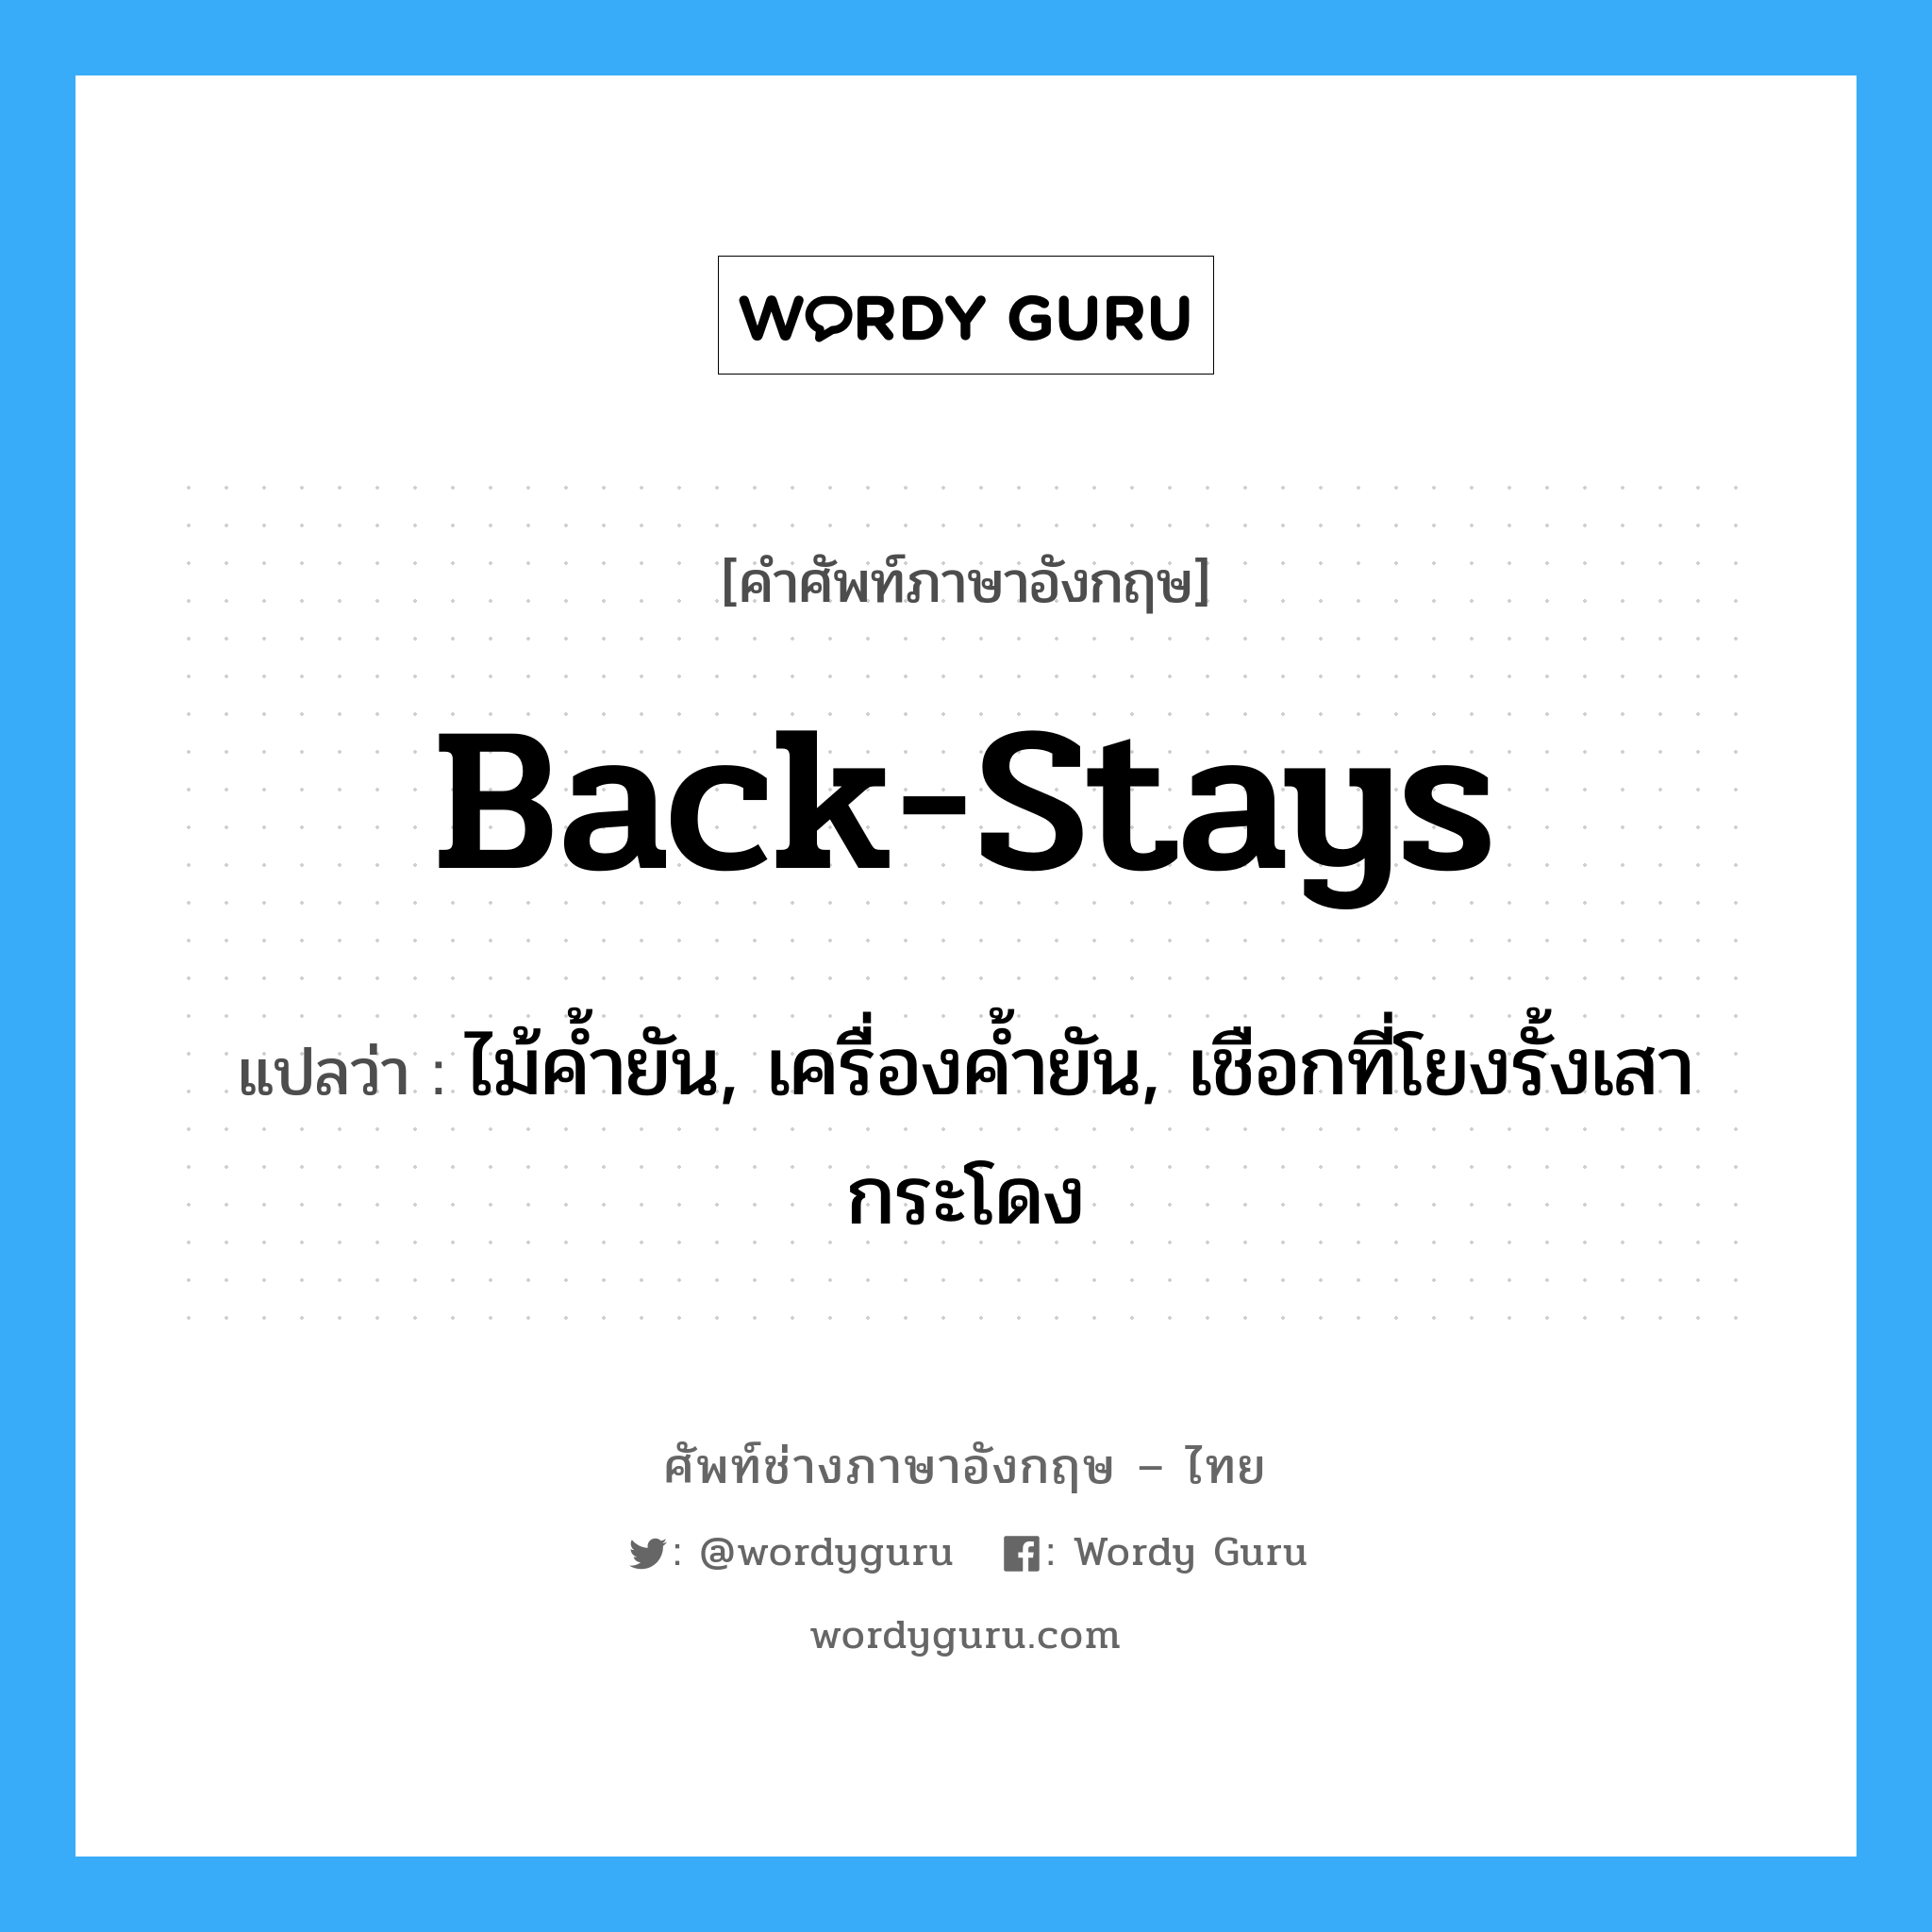 back-stays แปลว่า?, คำศัพท์ช่างภาษาอังกฤษ - ไทย back-stays คำศัพท์ภาษาอังกฤษ back-stays แปลว่า ไม้ค้ำยัน, เครื่องค้ำยัน, เชือกที่โยงรั้งเสากระโดง